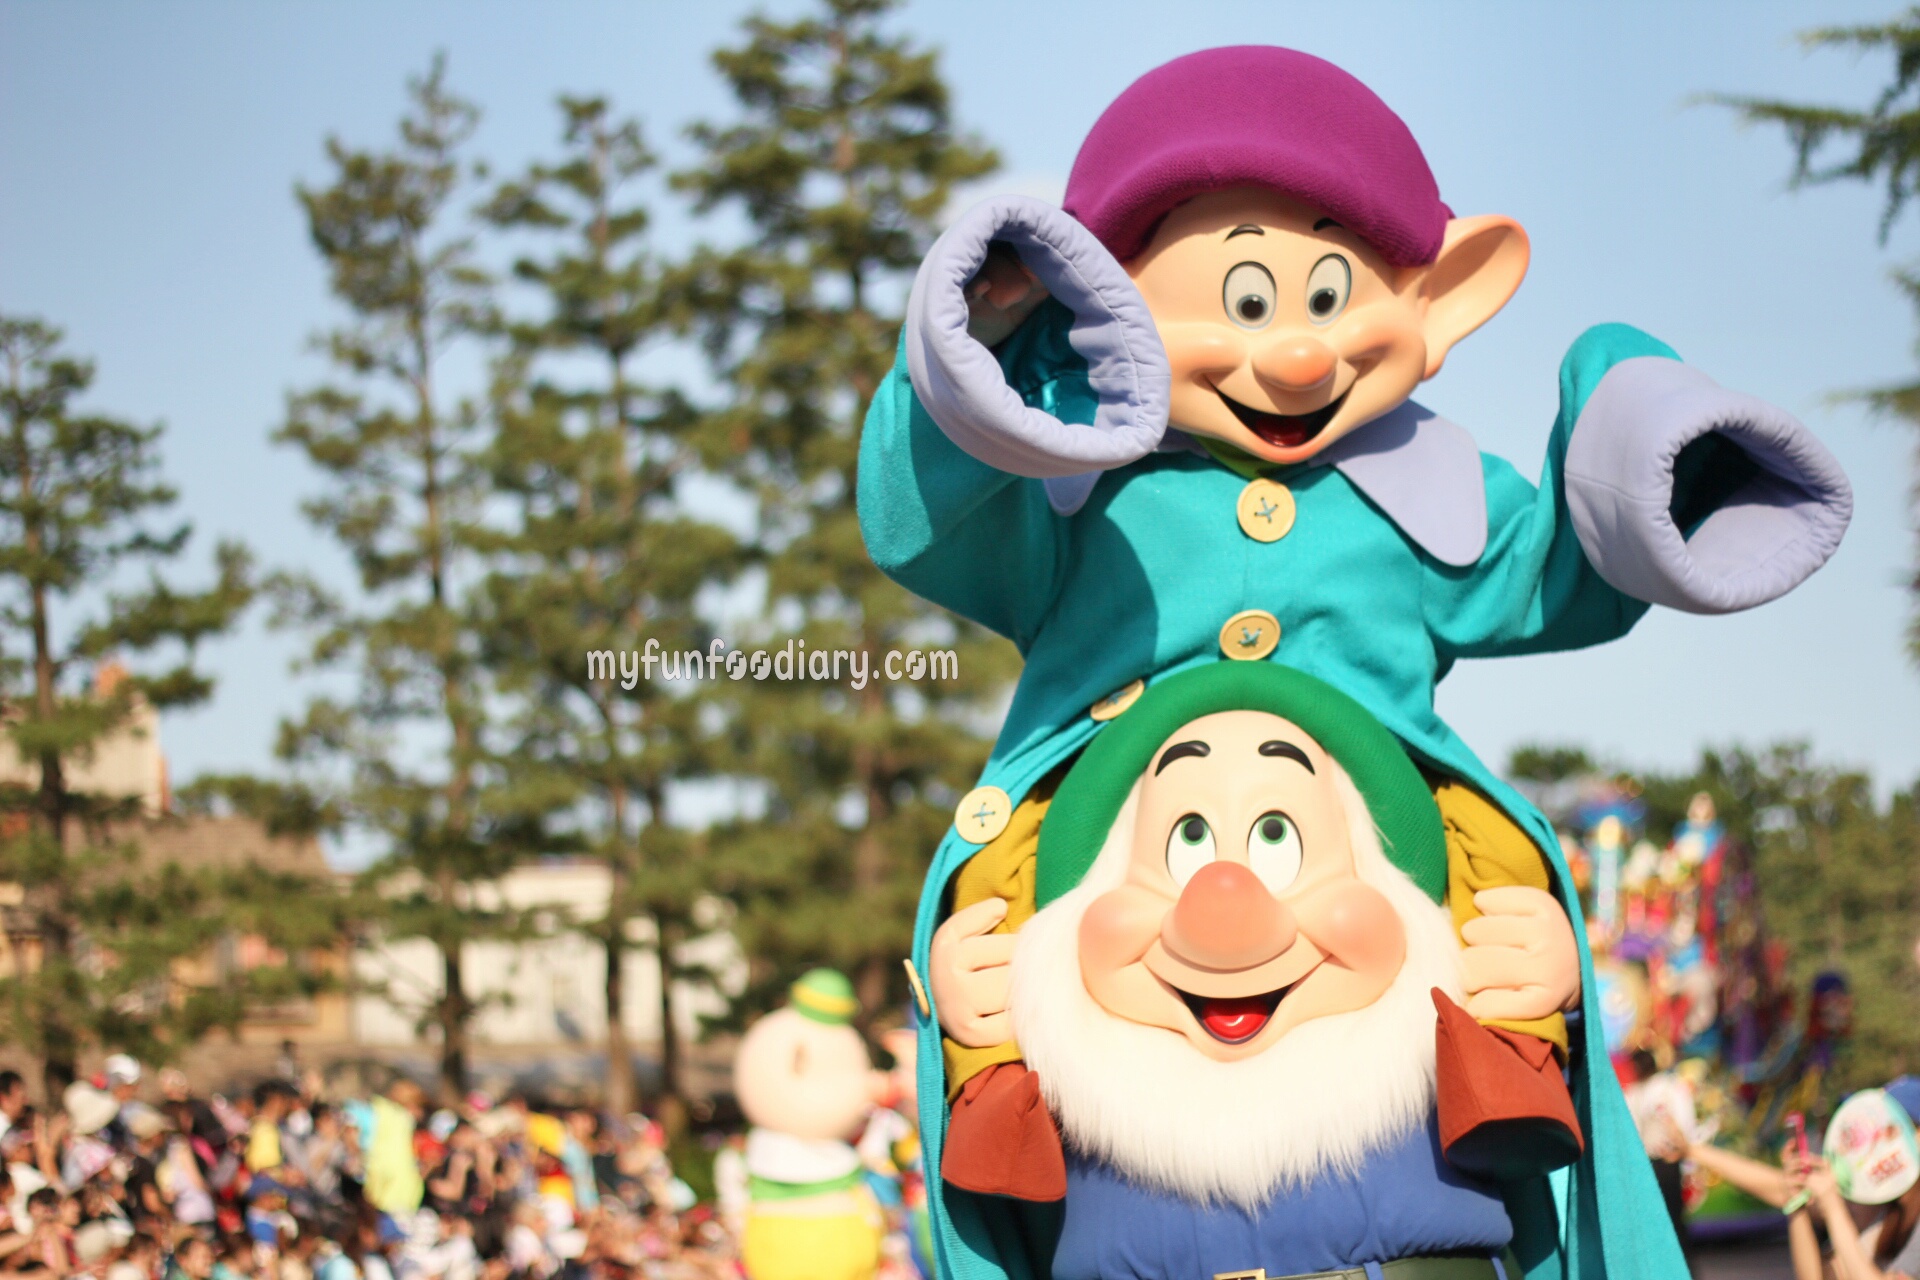 Tokyo Disney Parade July 2014 by Myfunfoodiary 02